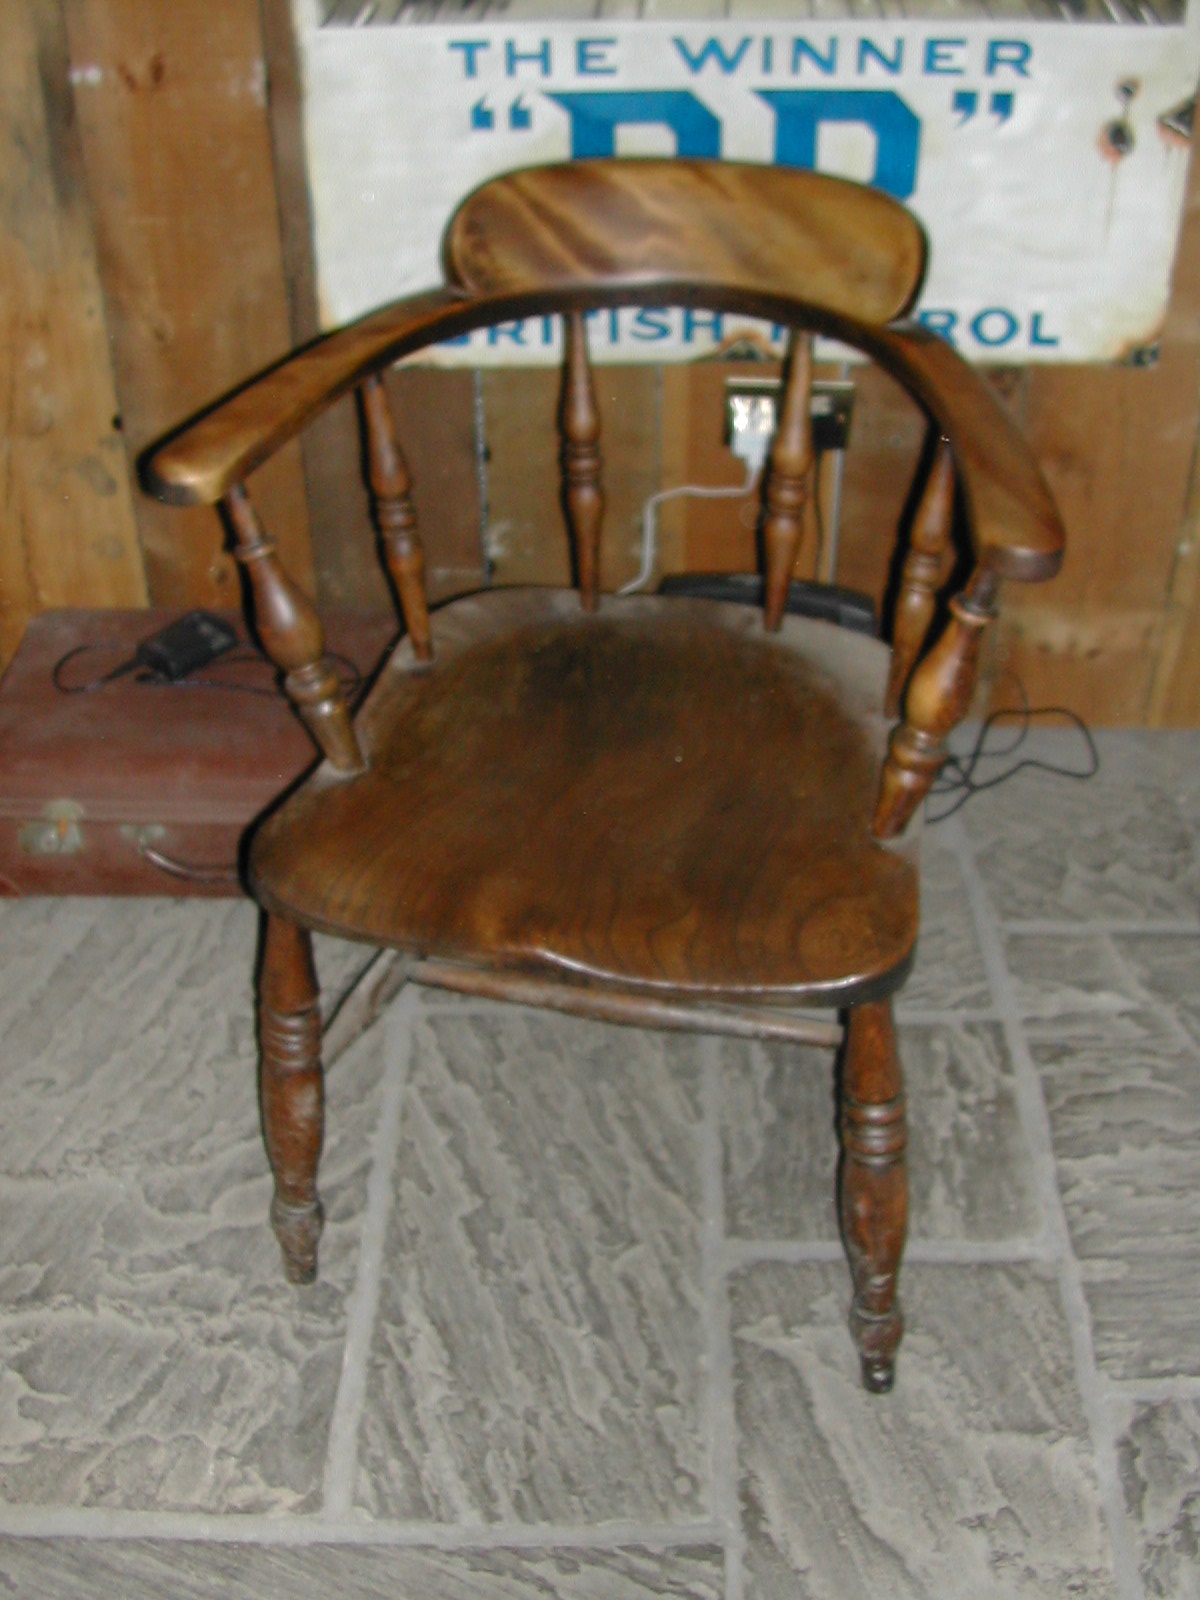 bensreckyard ebay photo Smokers chair 1